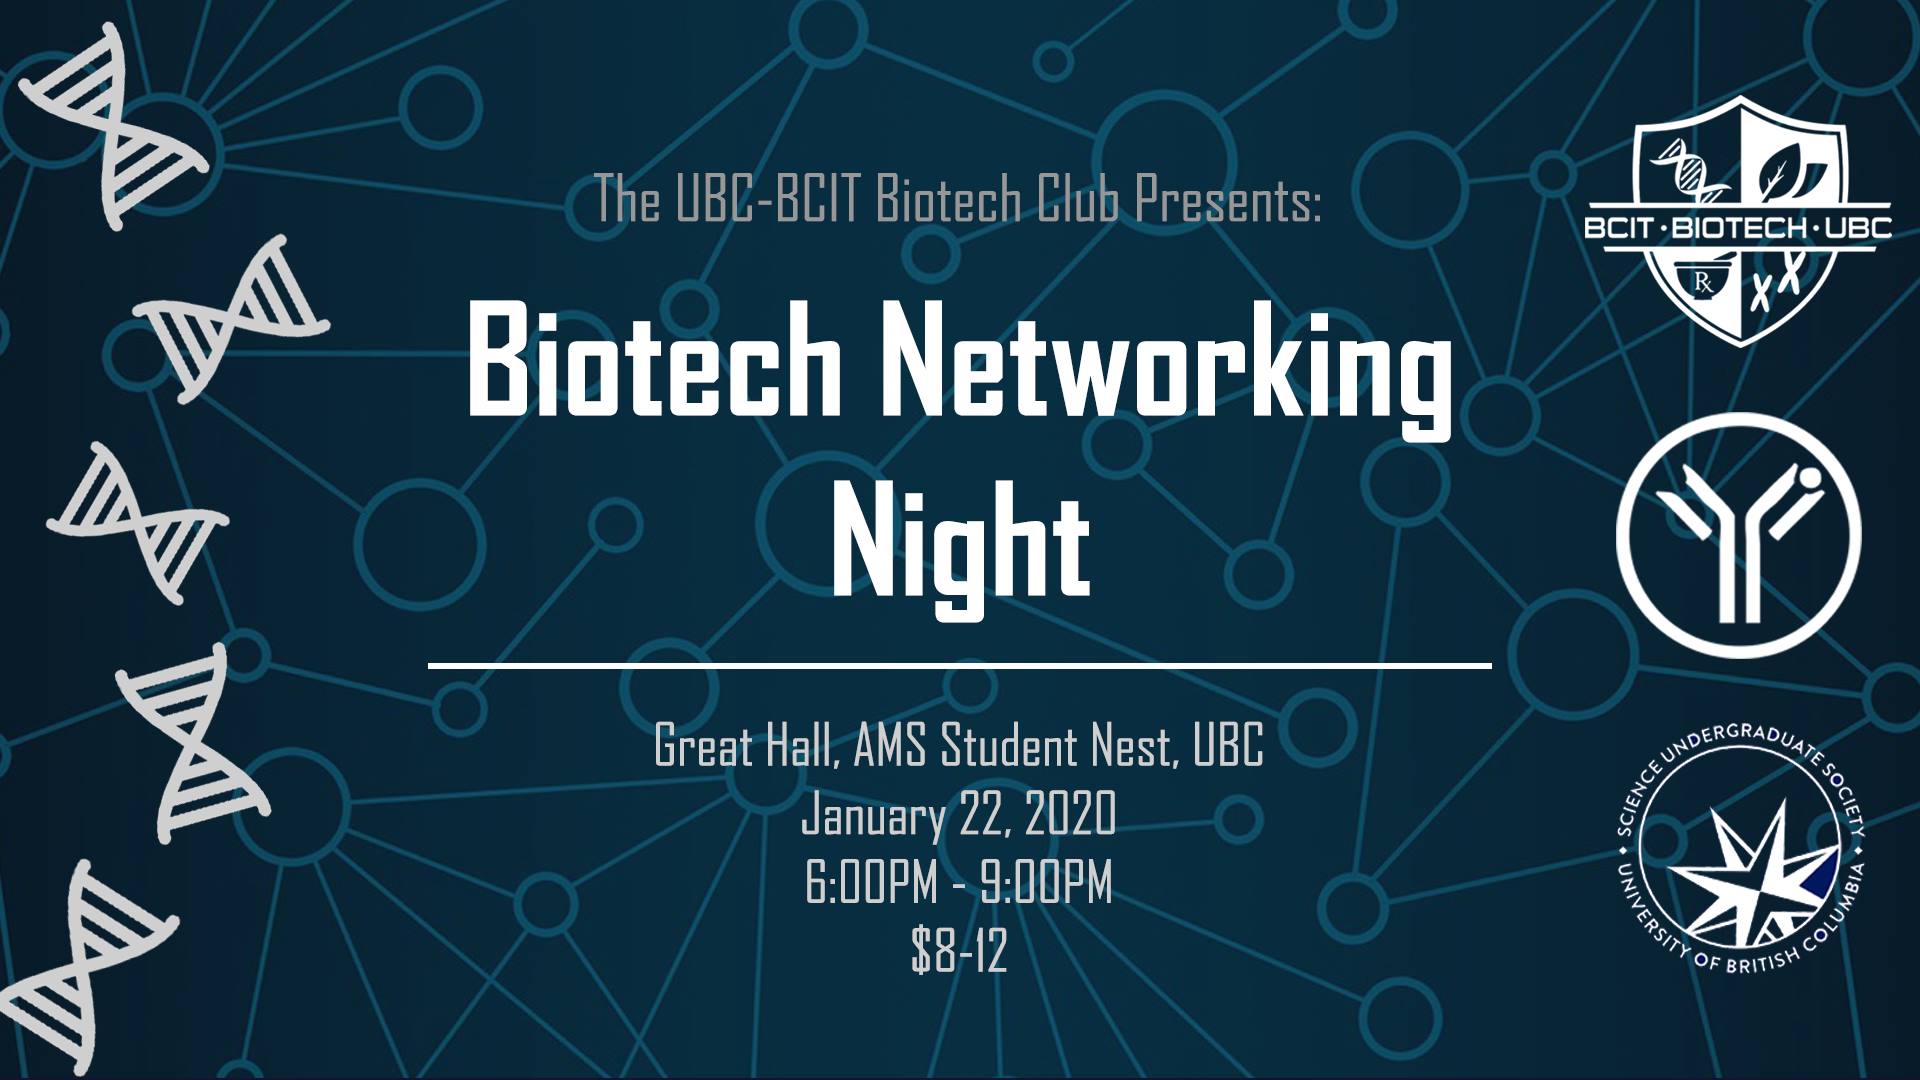 UBC BCIT biotech networking night 2020